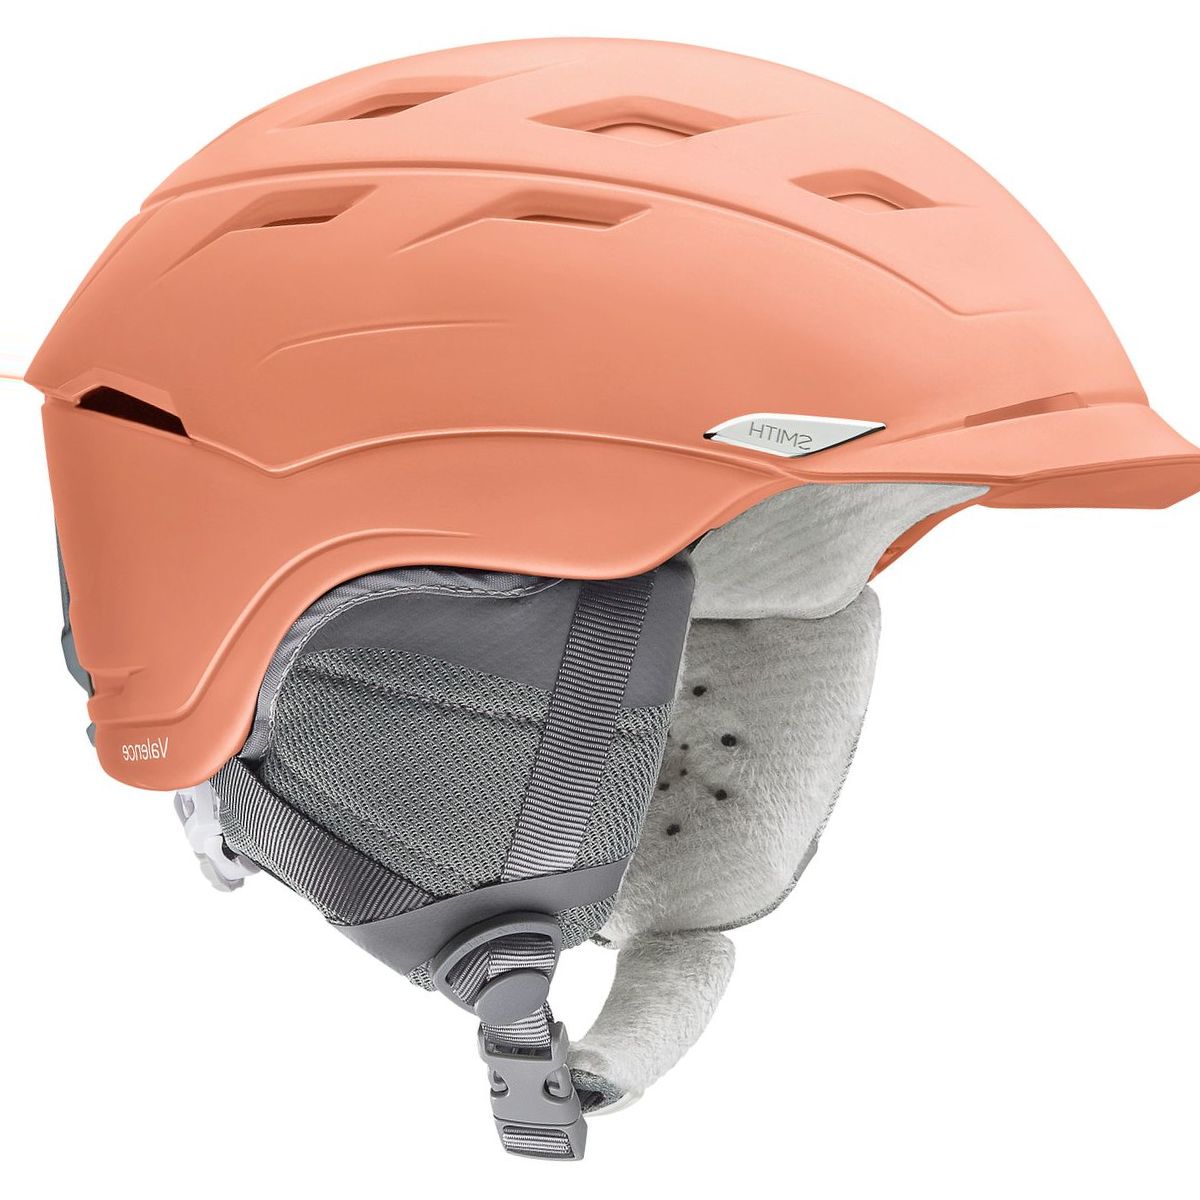 Smith Valence Helmet - Women's